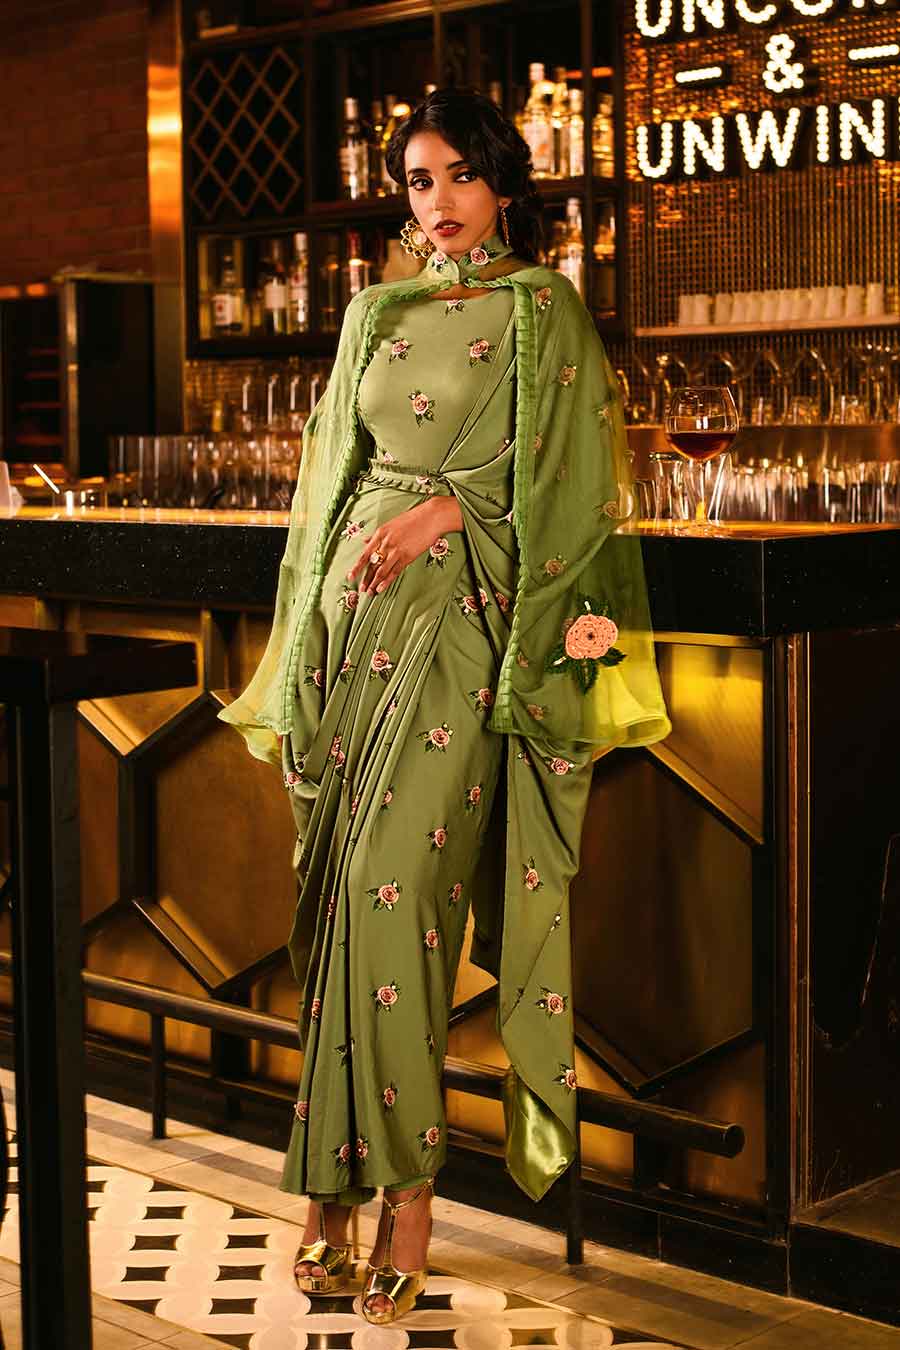 Seafoam Green Saree Dress with Cape